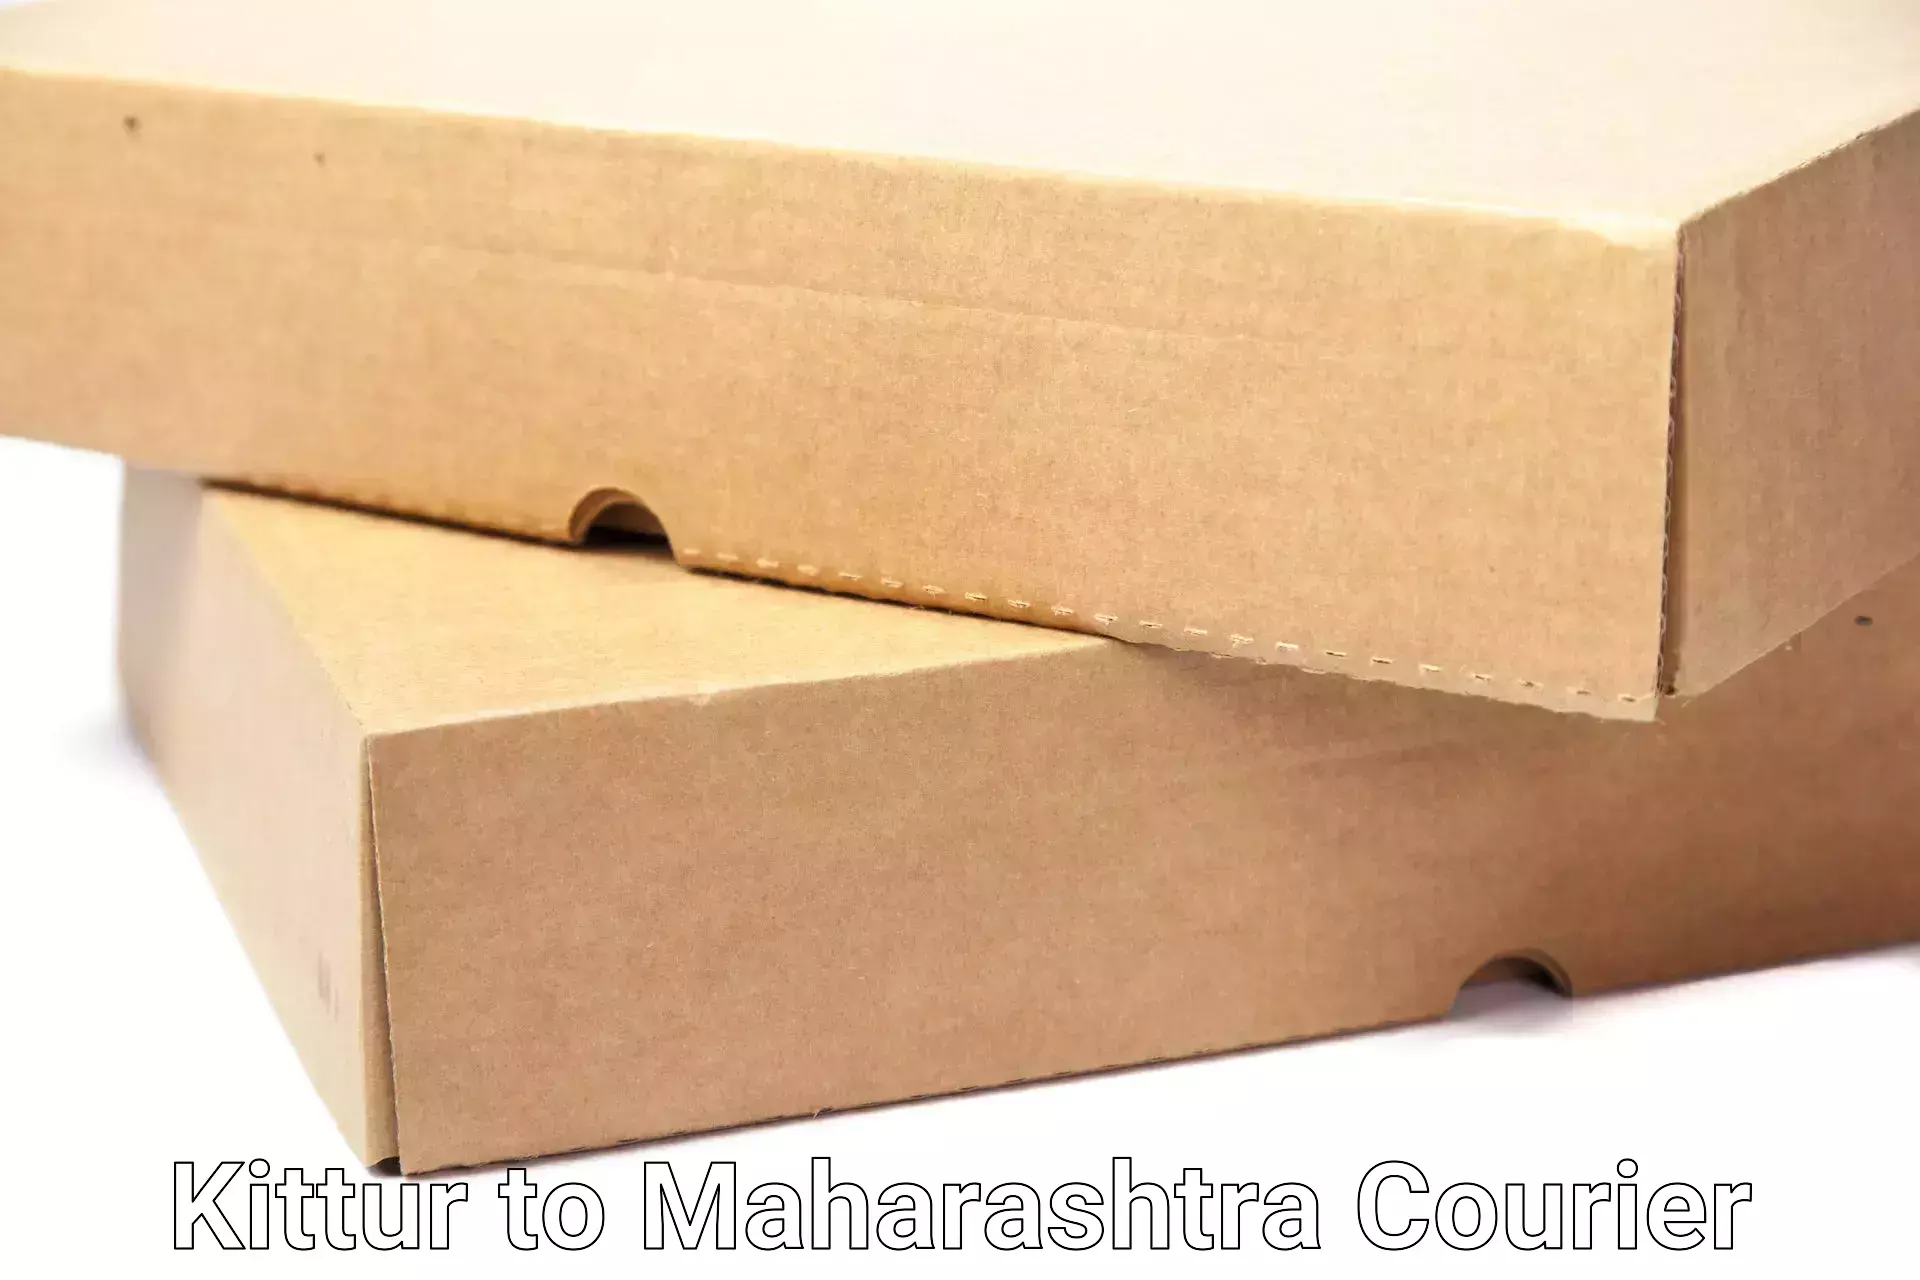 Furniture delivery service Kittur to Raigarh Maharashtra